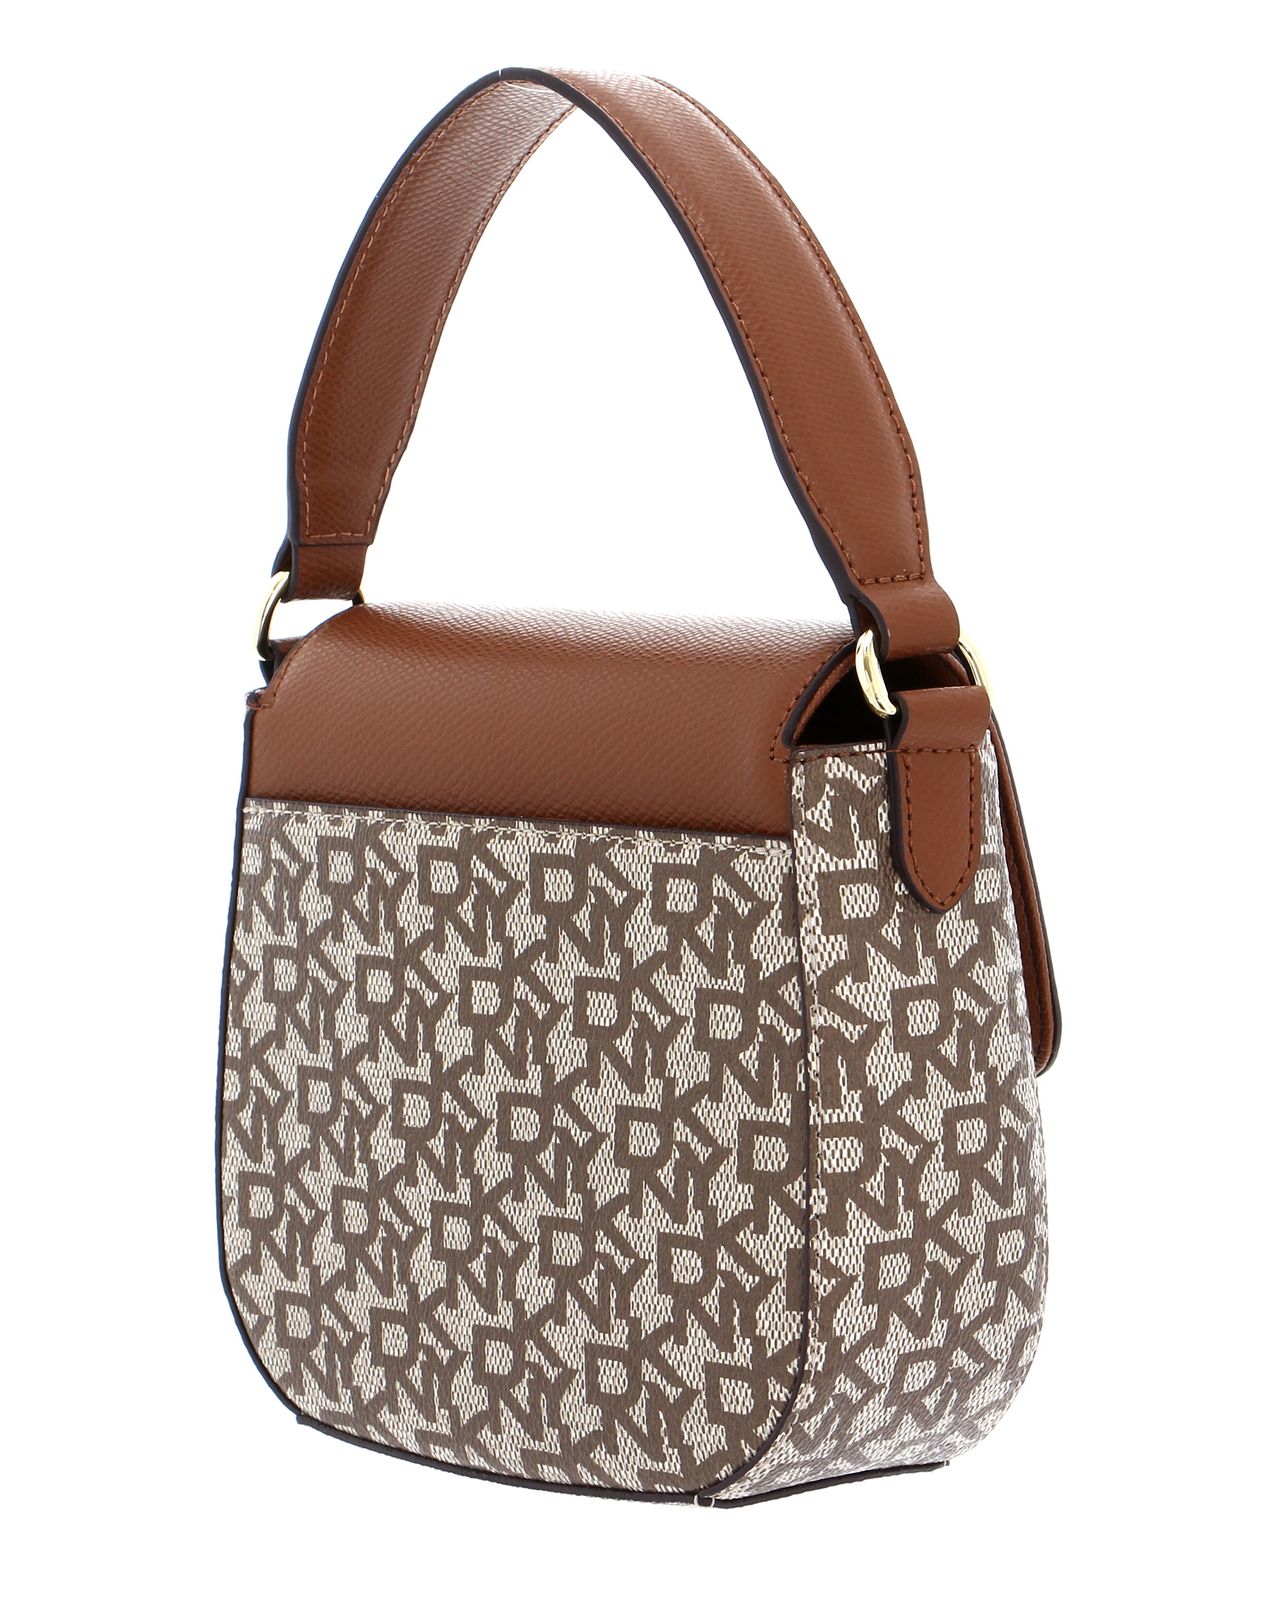 DKNY Crossbody Bag Chino / Crml | Buy bags, purses & accessories online ...